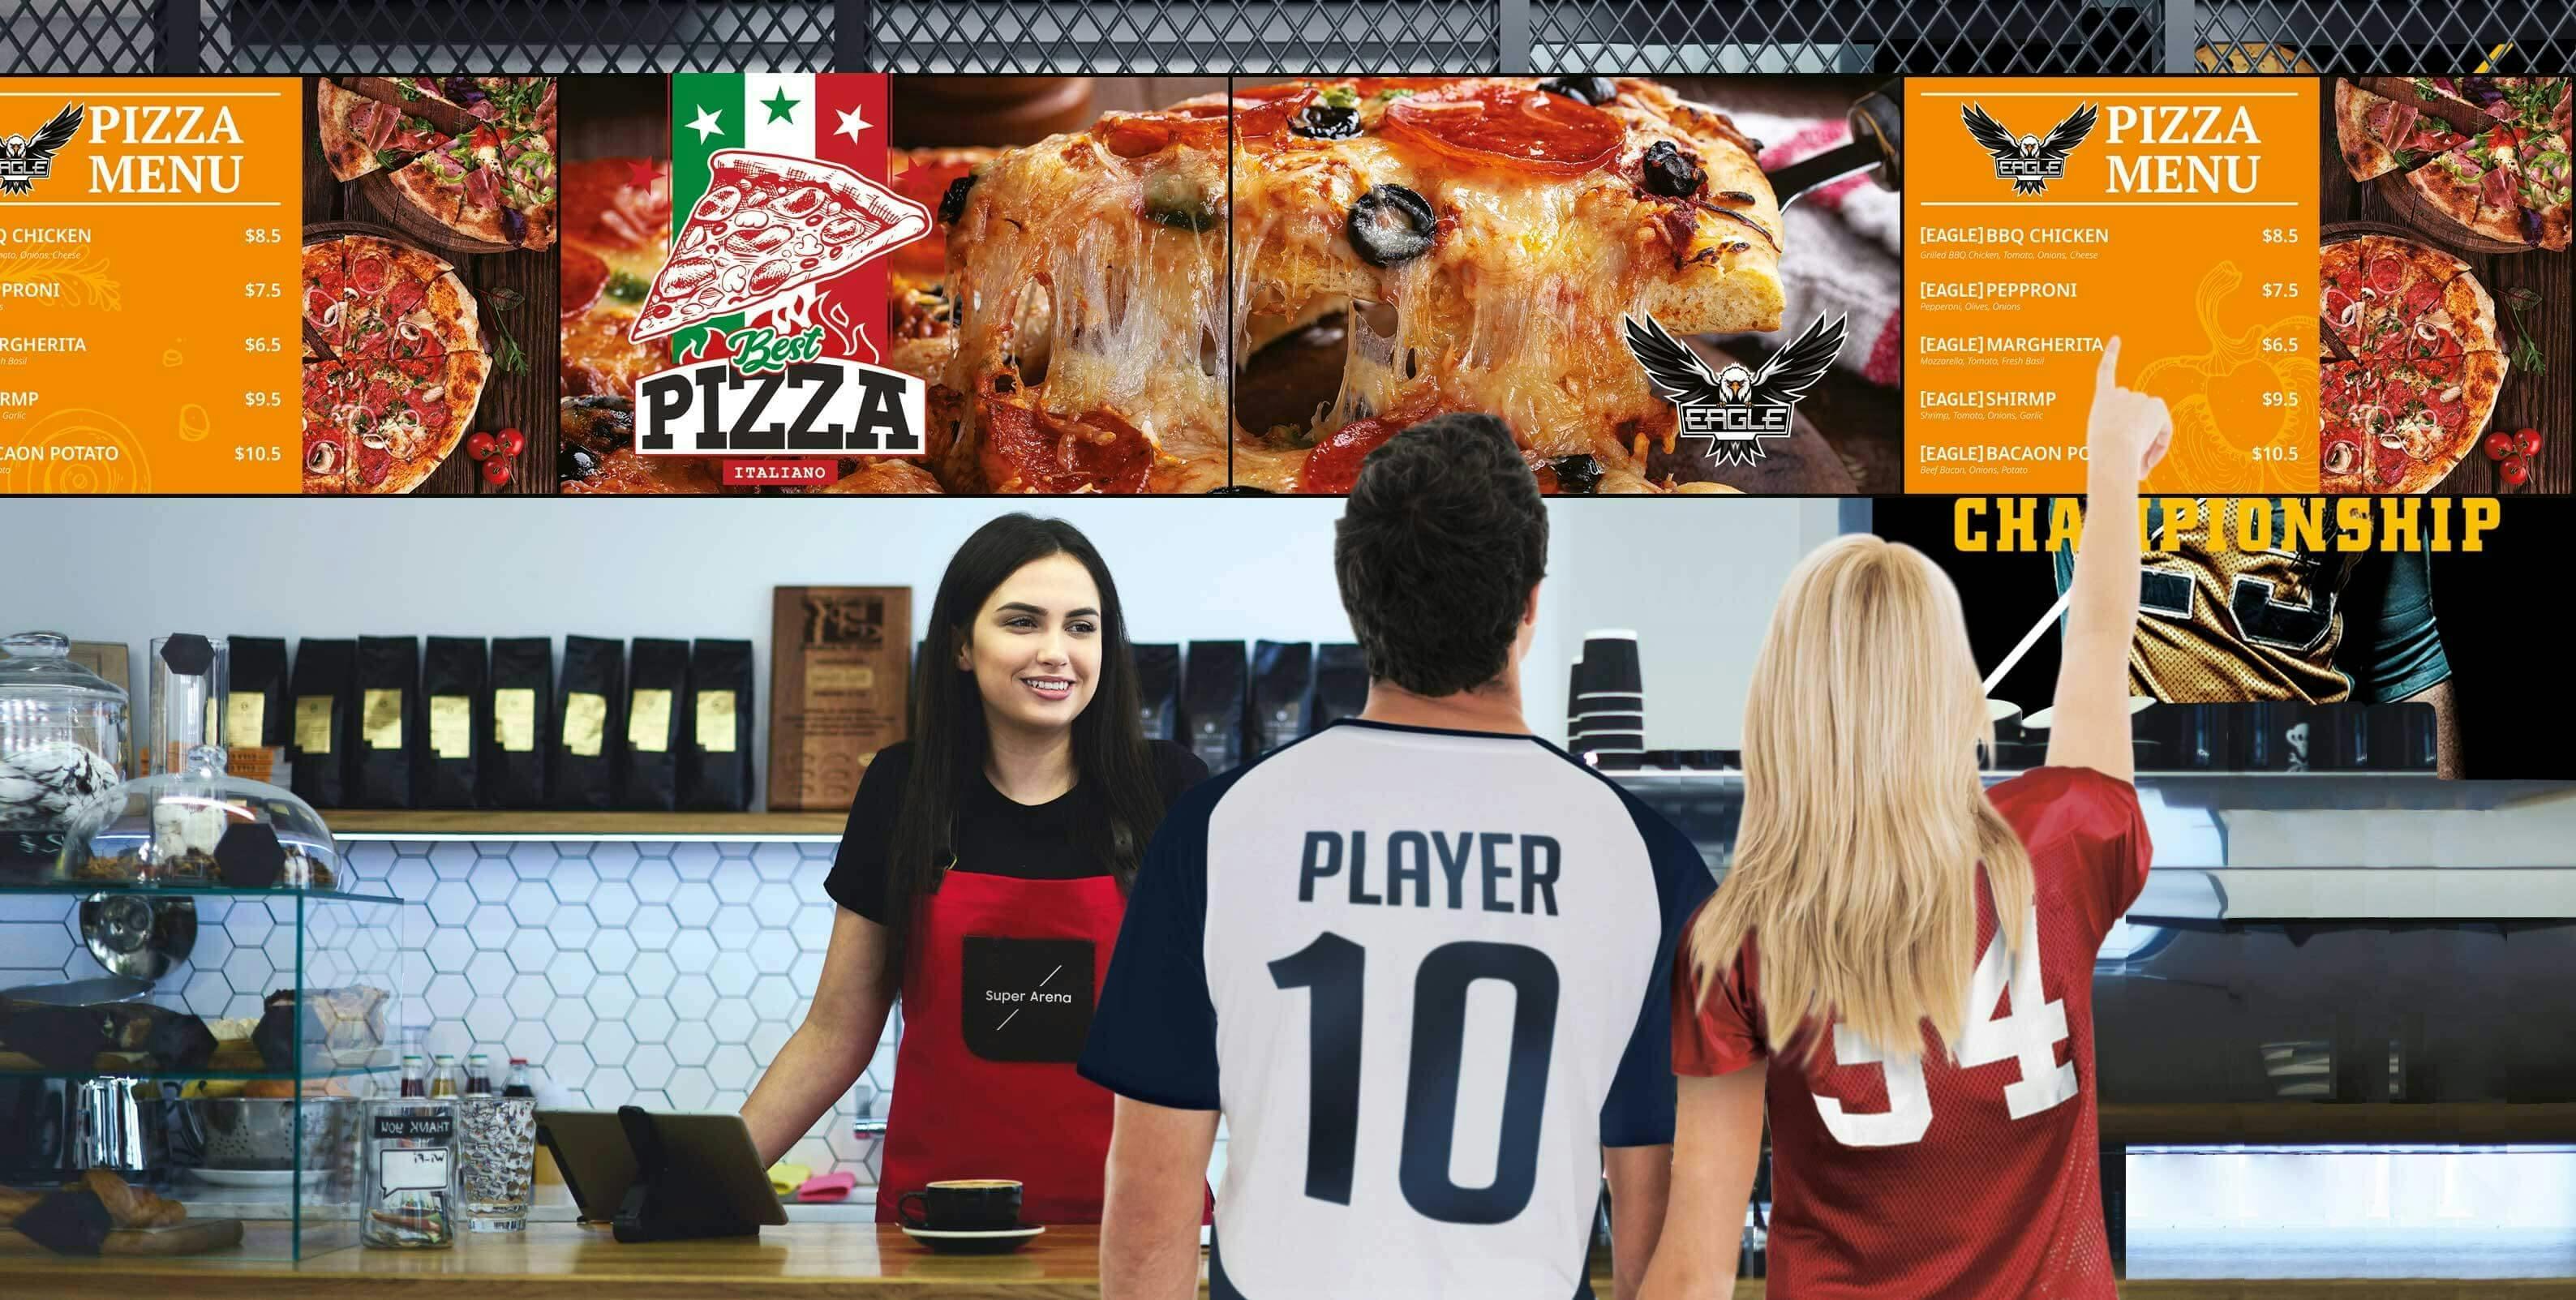 Italian restaurant digital signage promoting menu items via a digital menu board